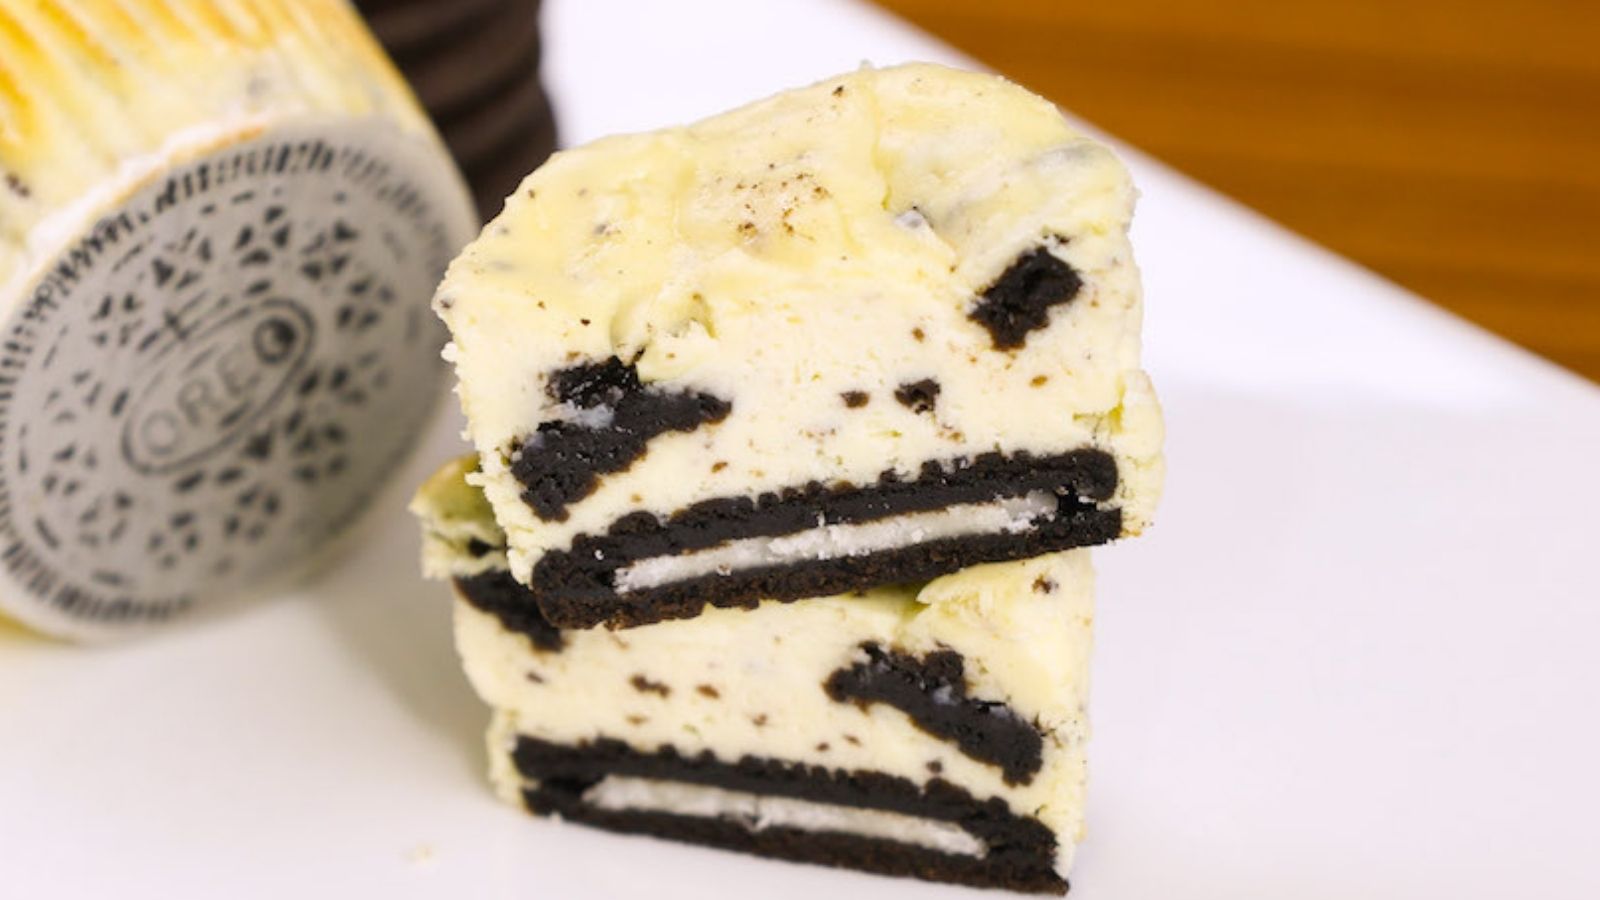 Oreo Cheesecake Made with Sour Cream